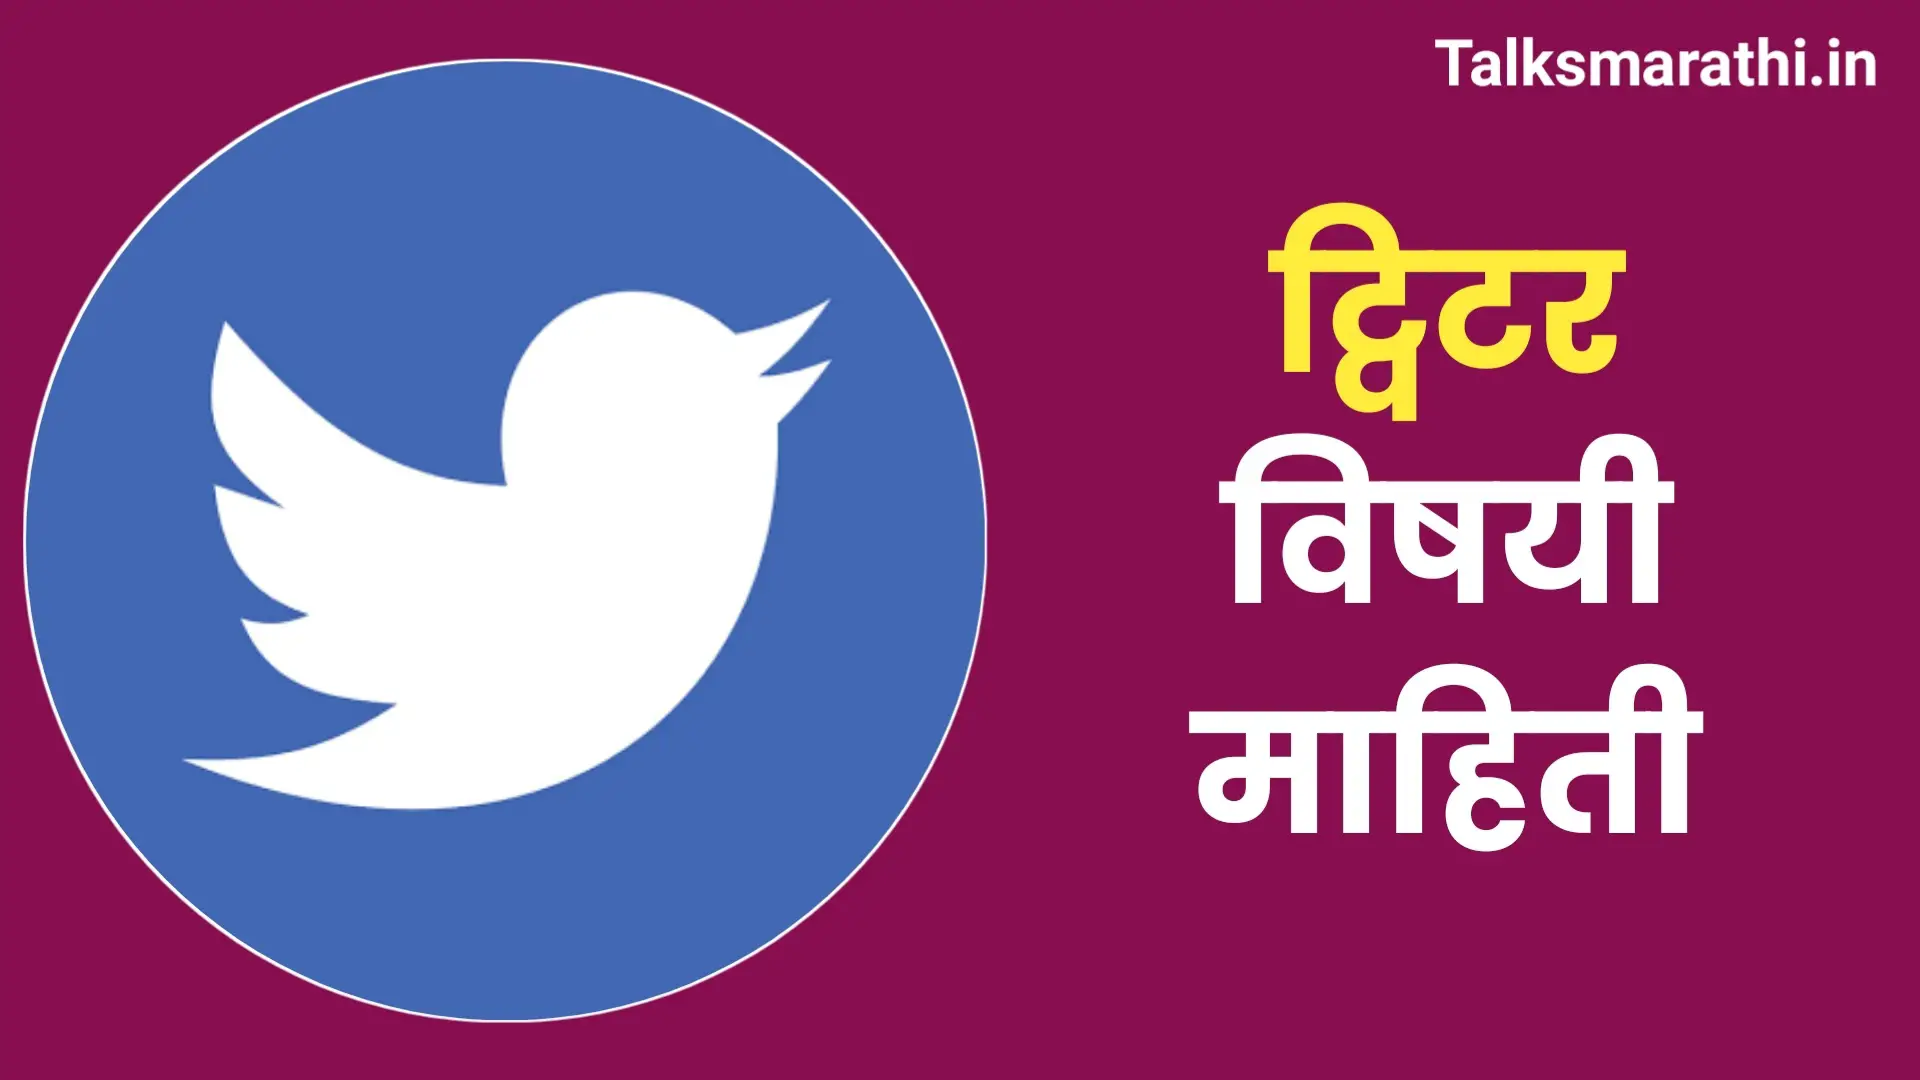 ट्विटर विषयी माहिती | Twitter information in Marathi